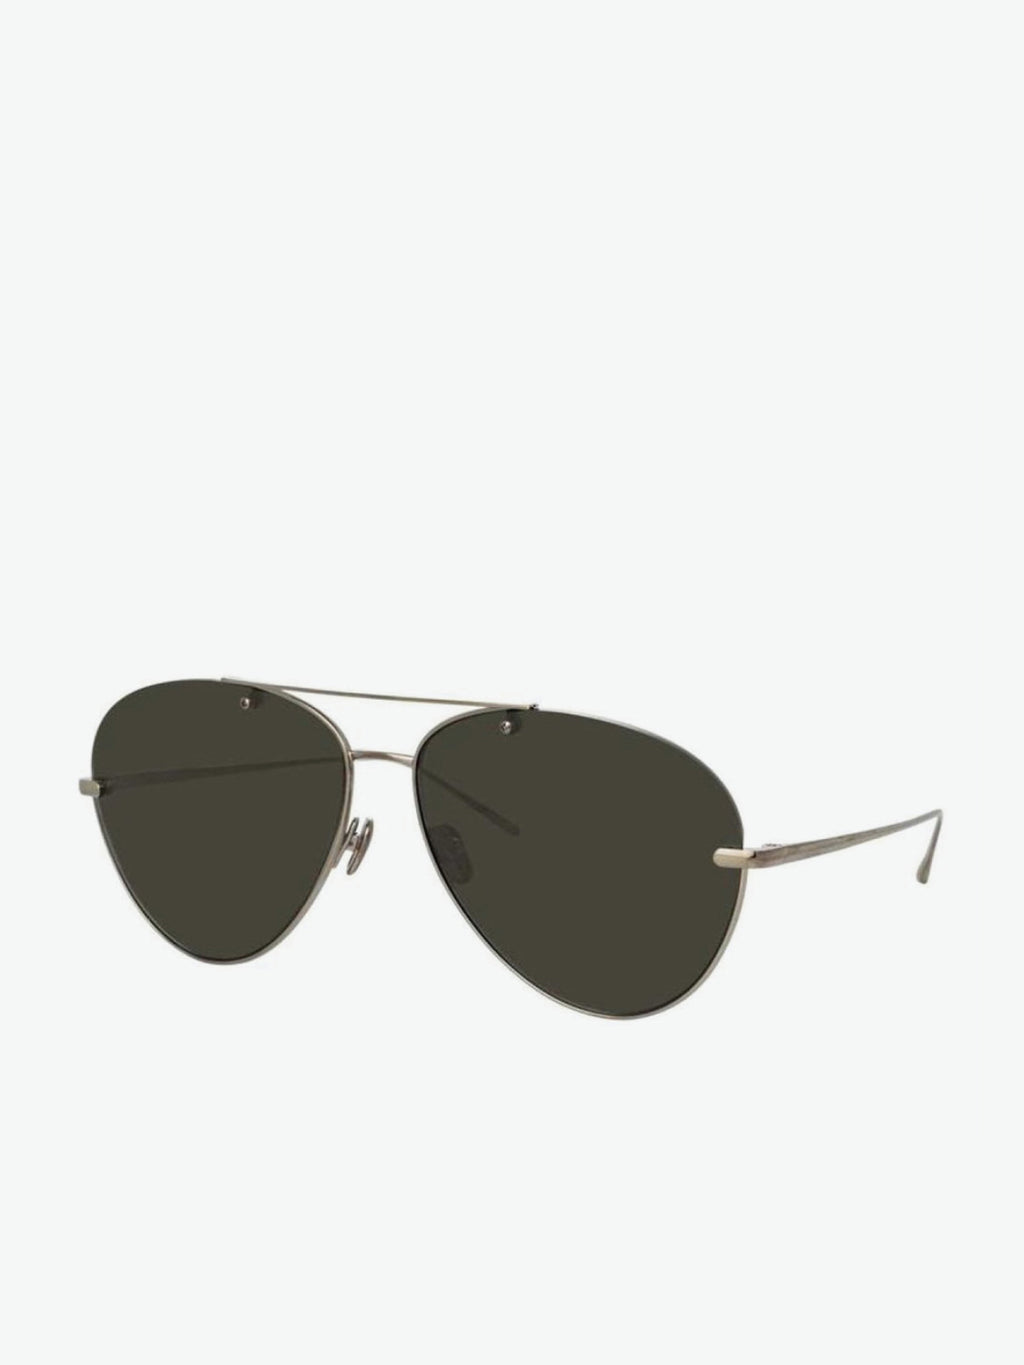 Linda Farrow White Gold Aviator Sunglasses | B